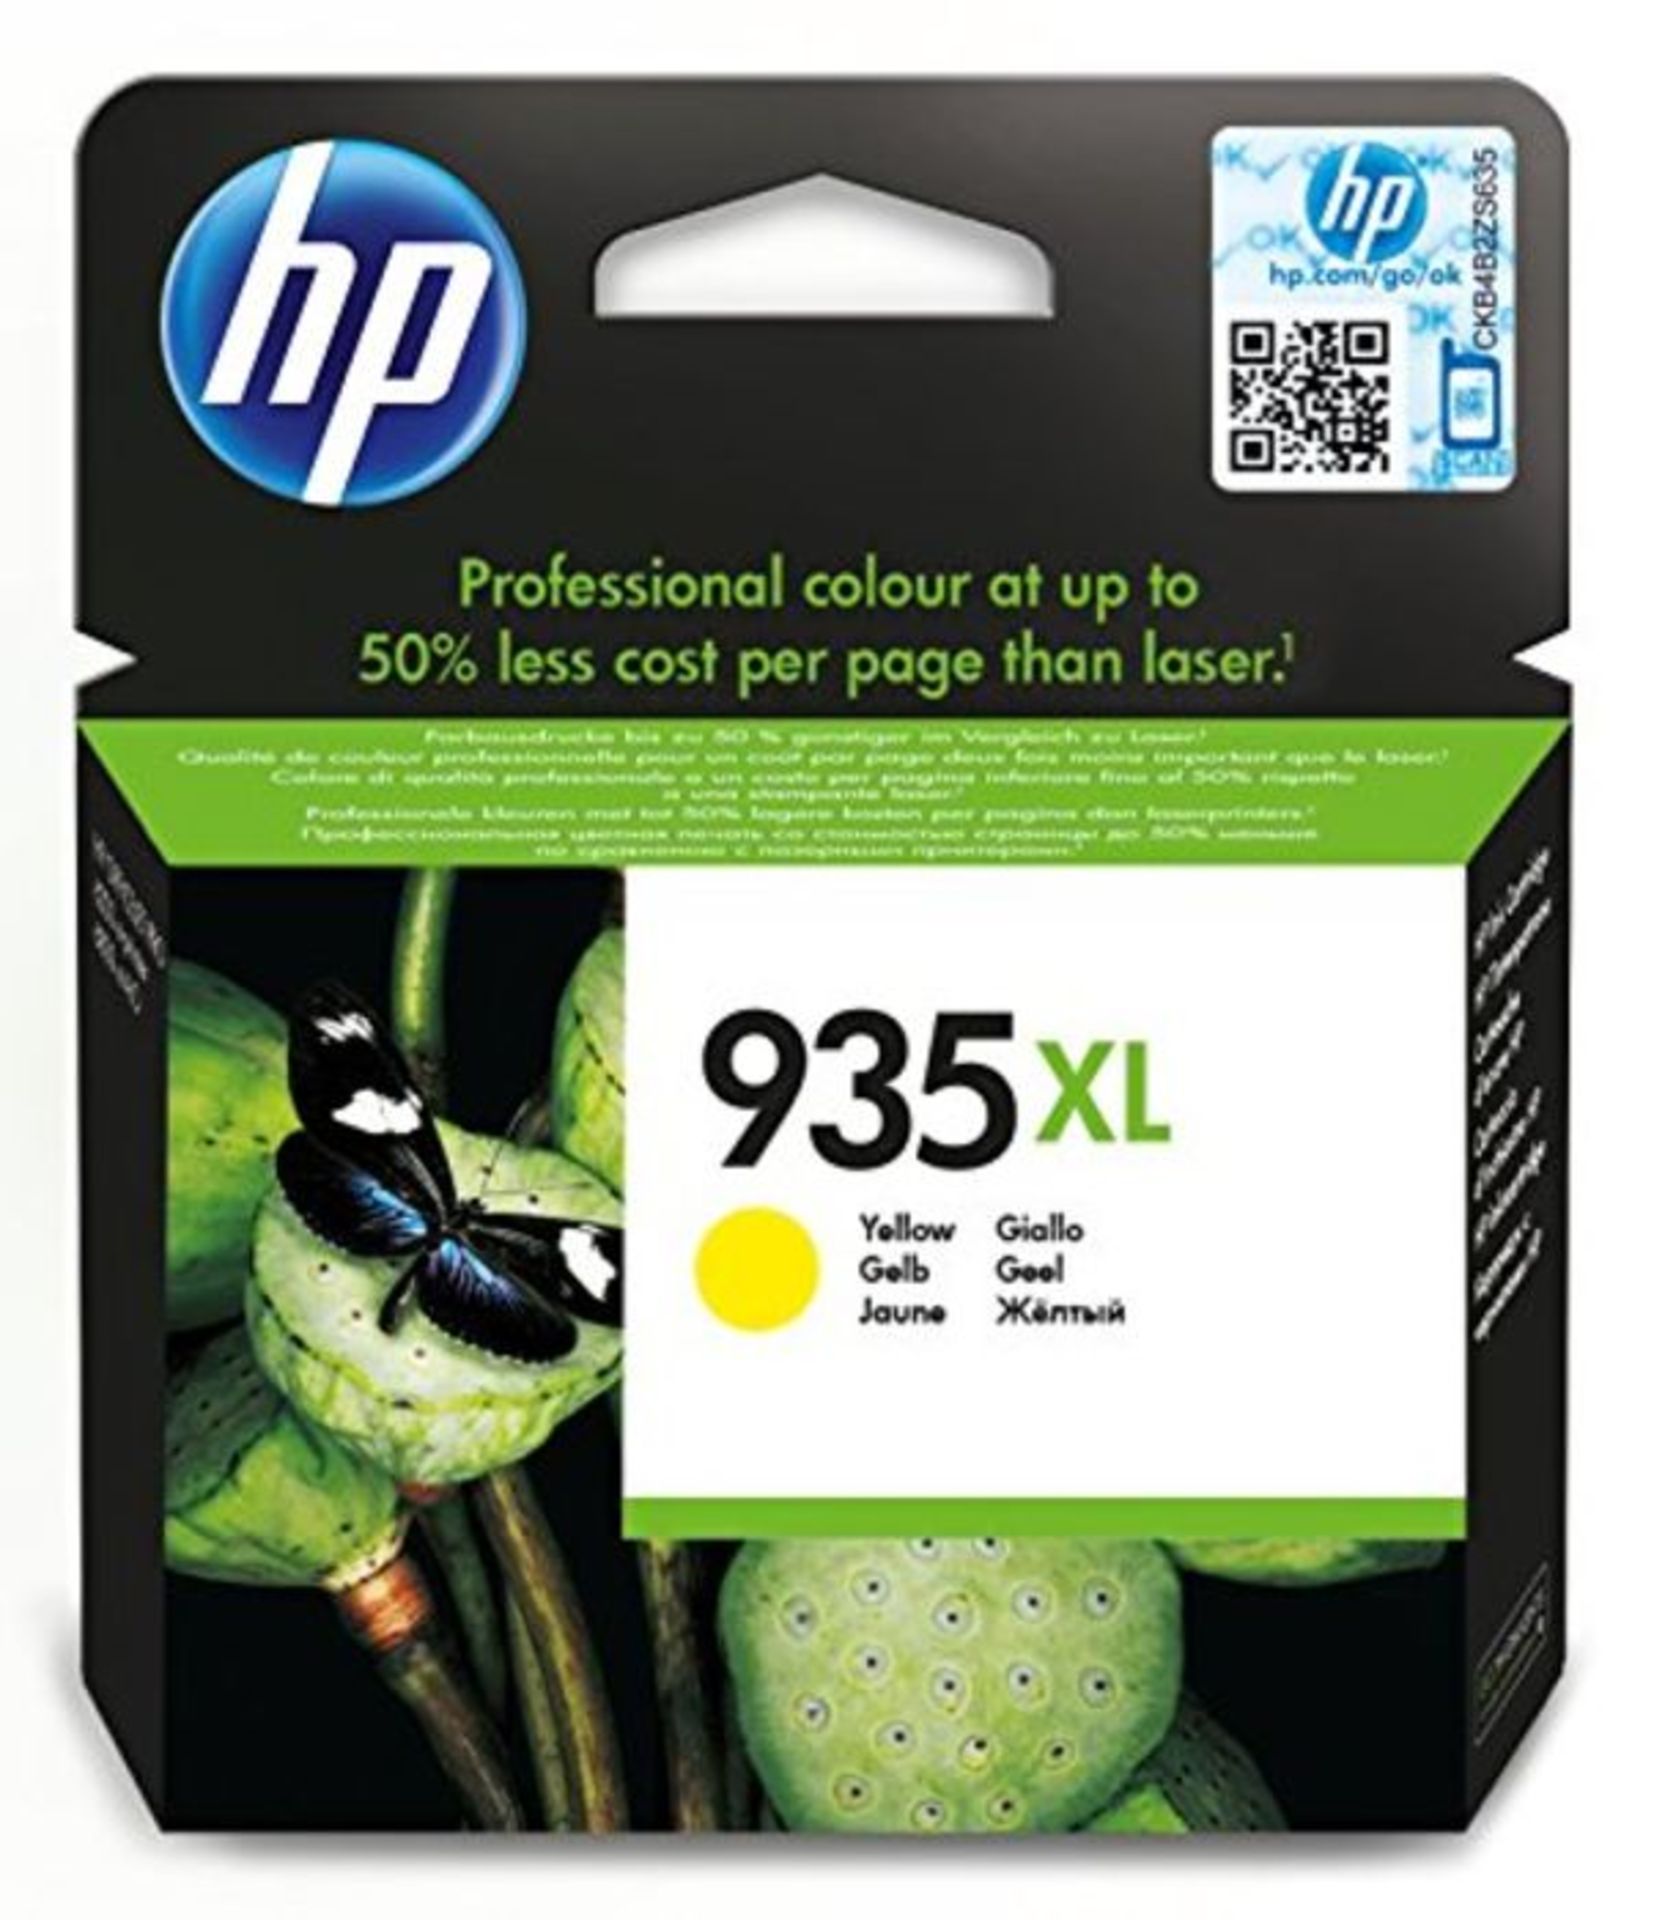 HP C2P26AE 935XL High Yield Original Ink Cartridge, Yellow, Single Pack - Image 3 of 4